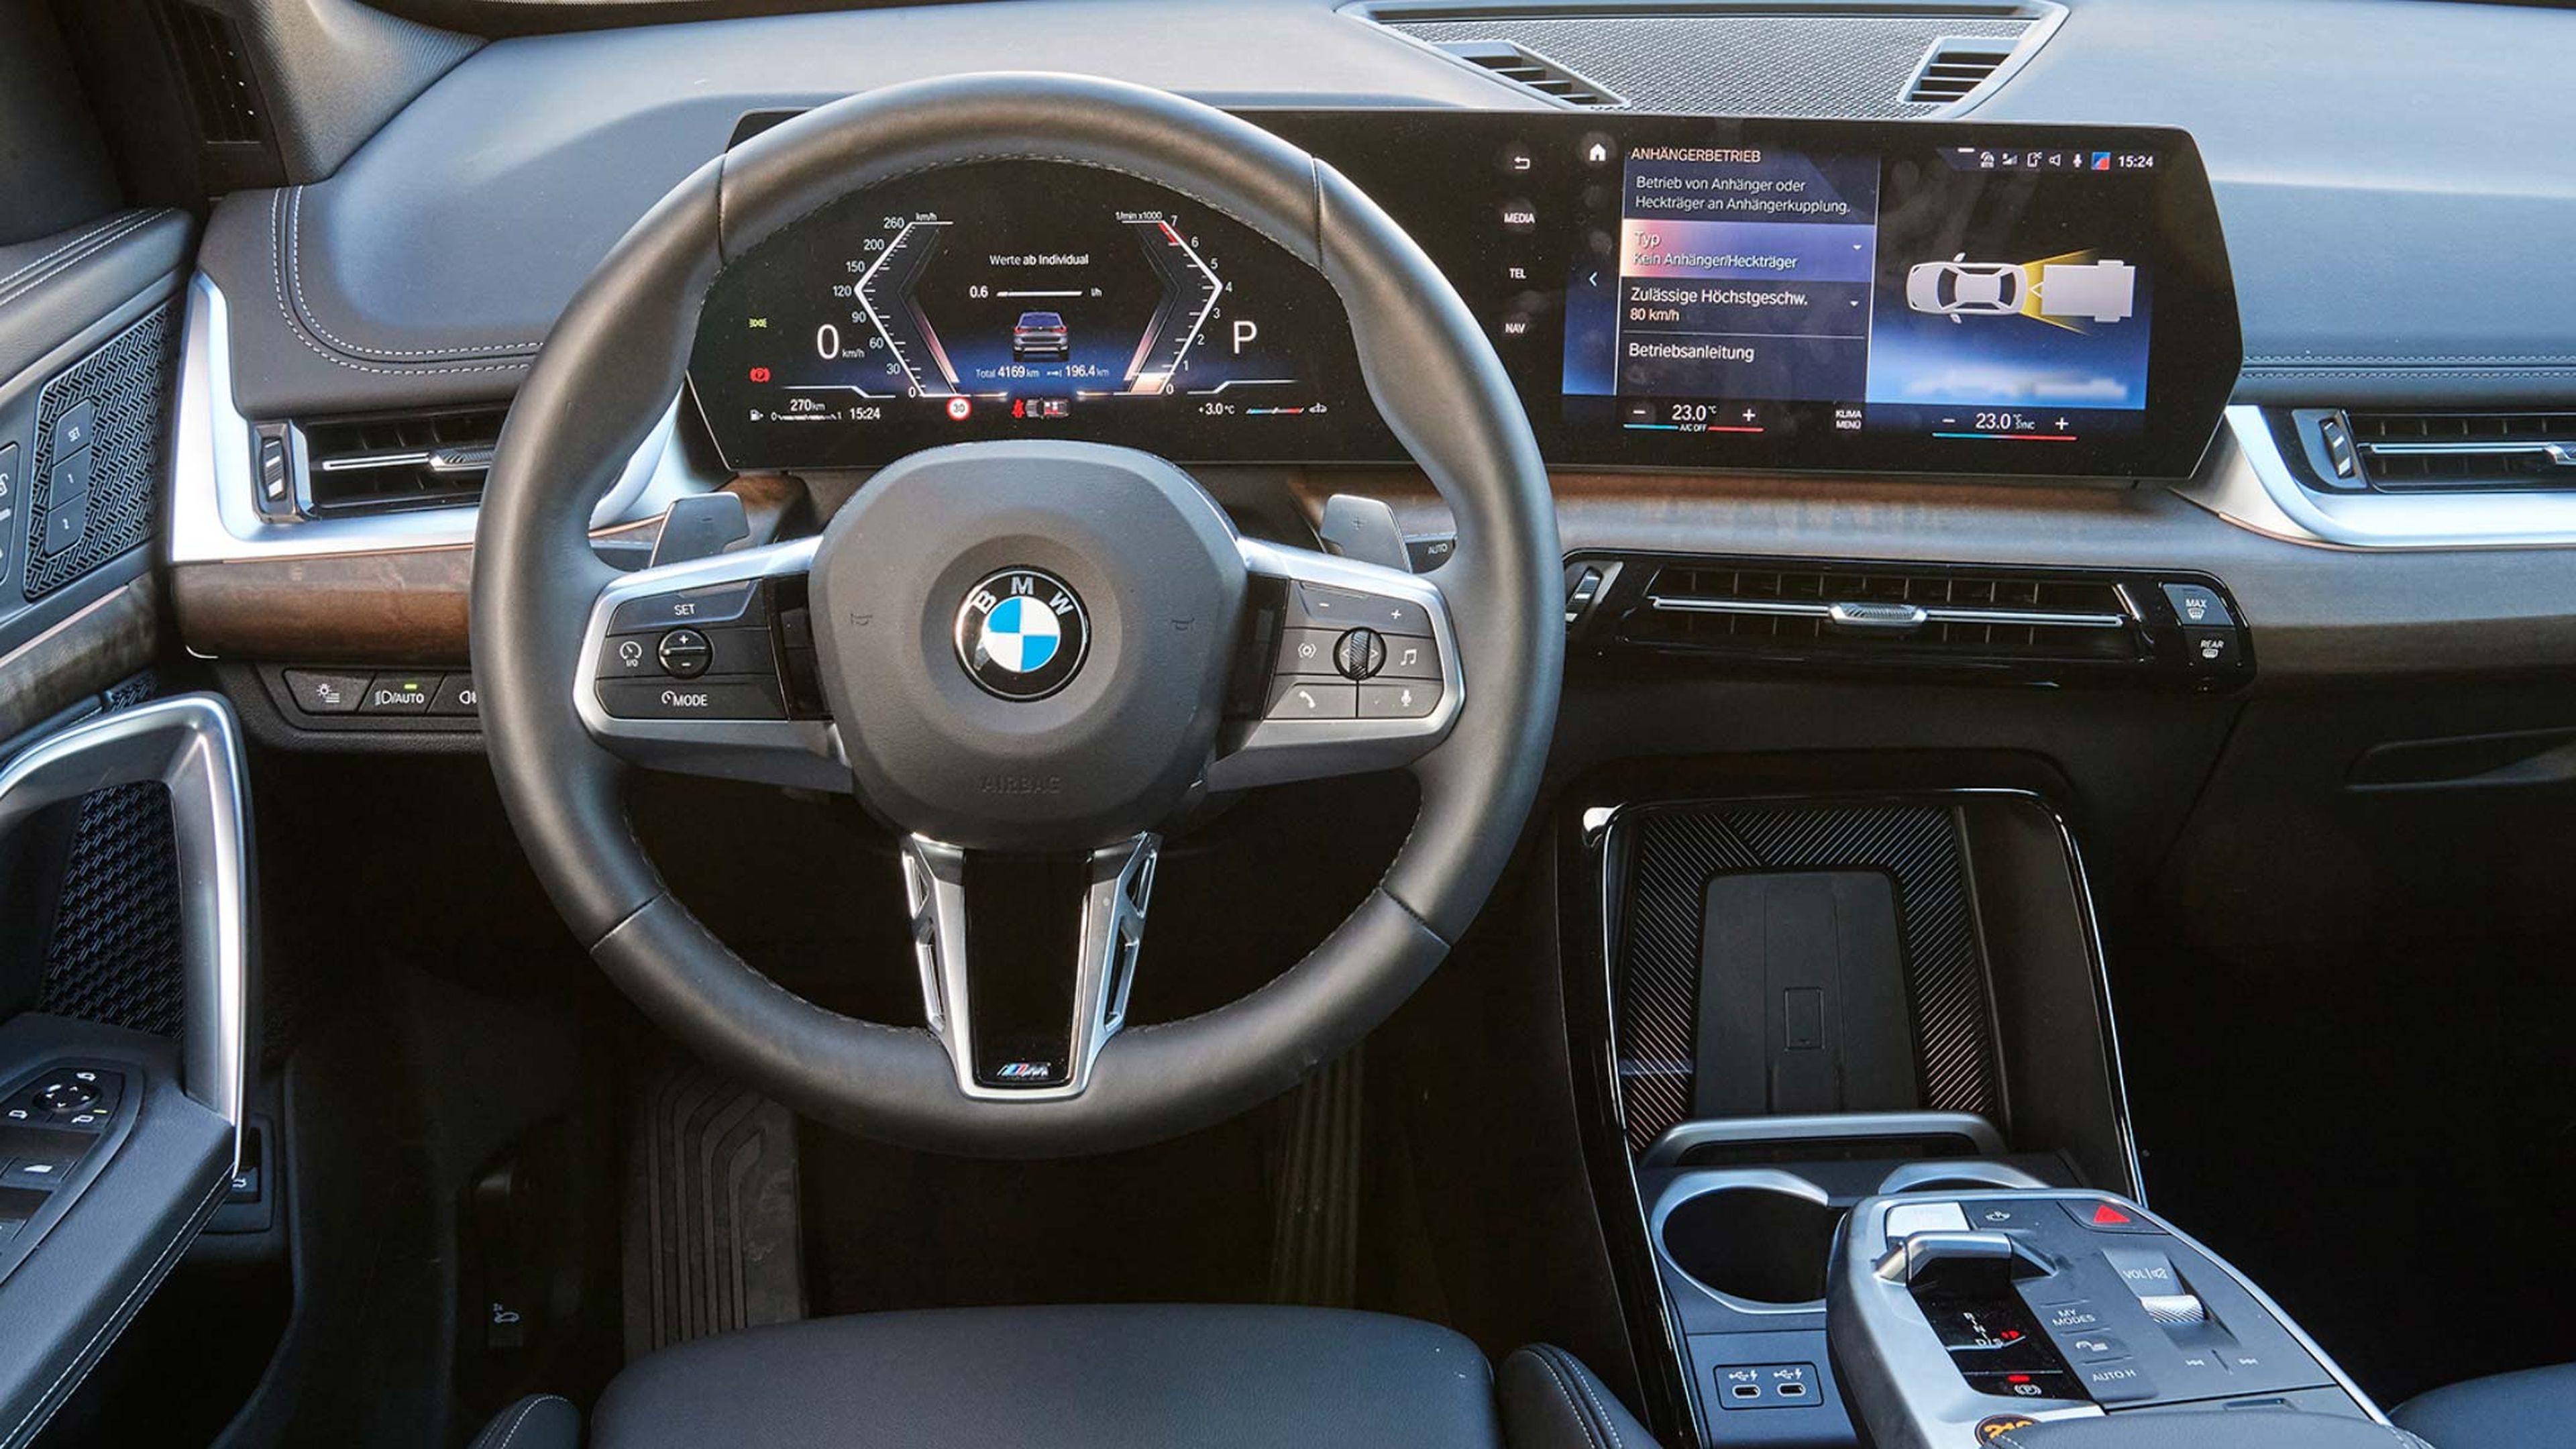 BMW X1 cockpit